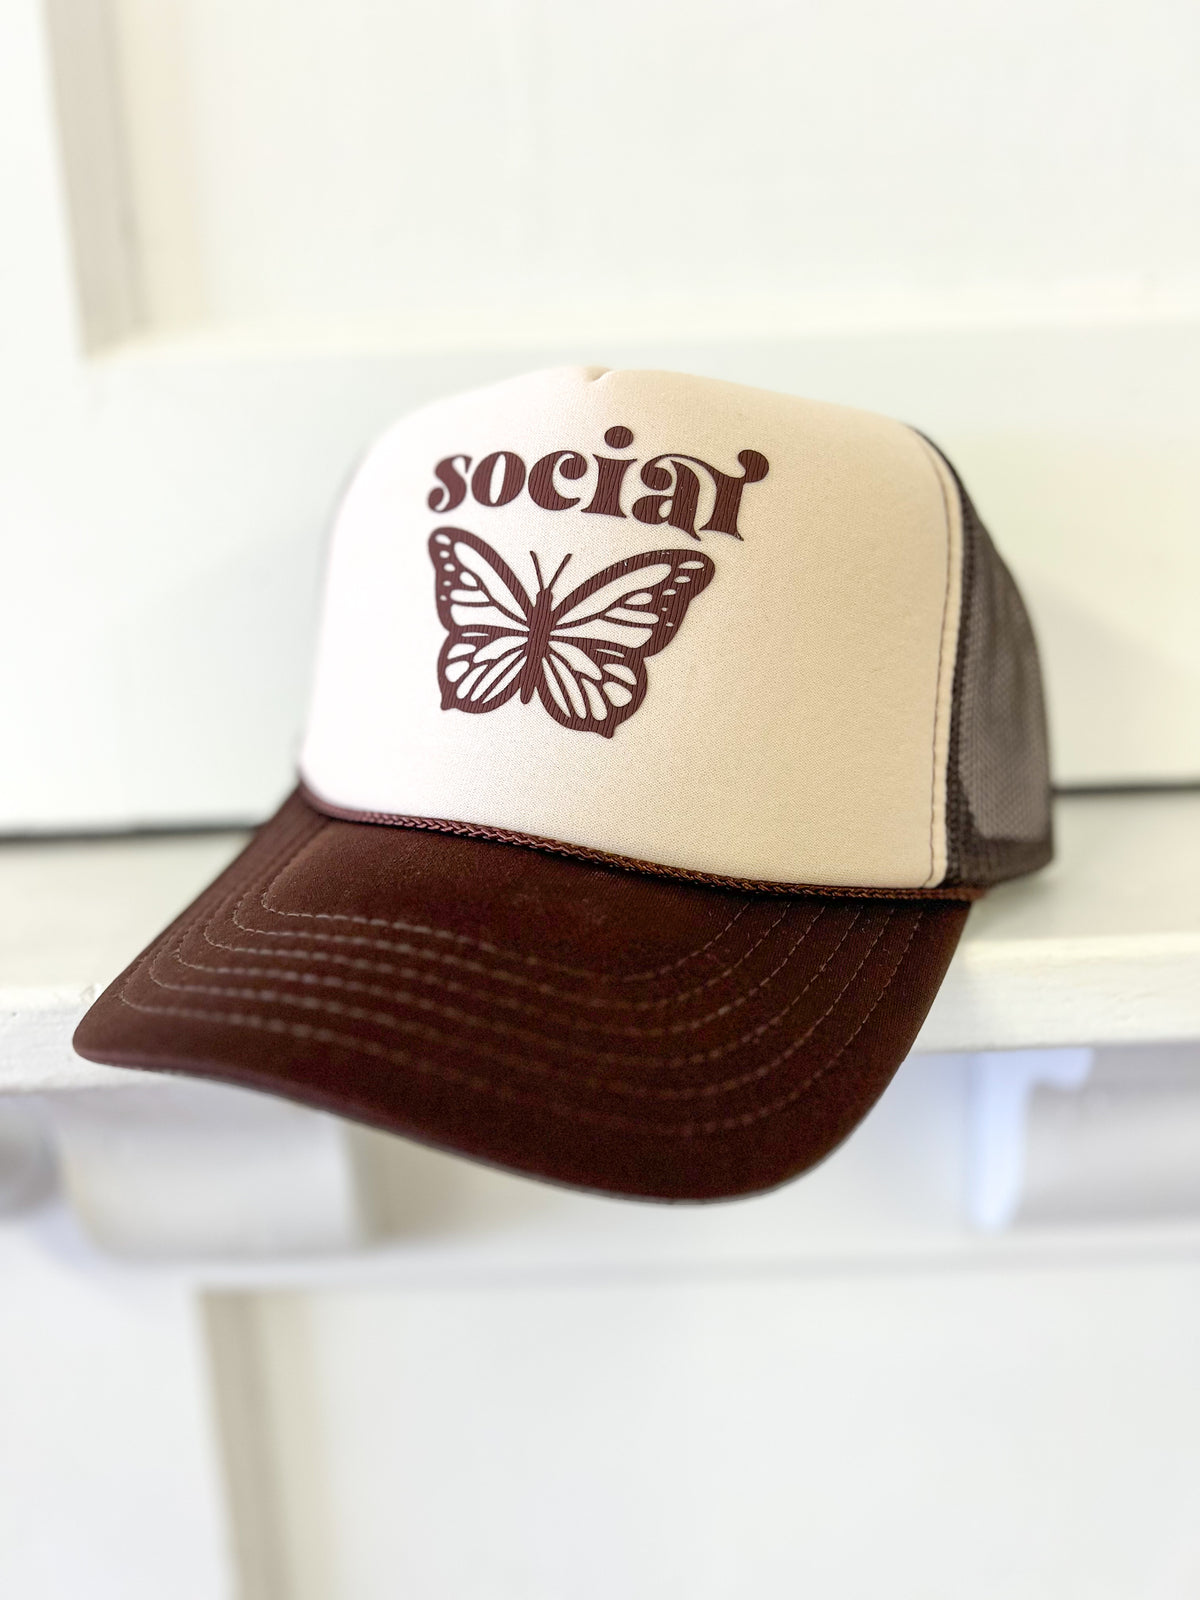 Social Butterfly Cap